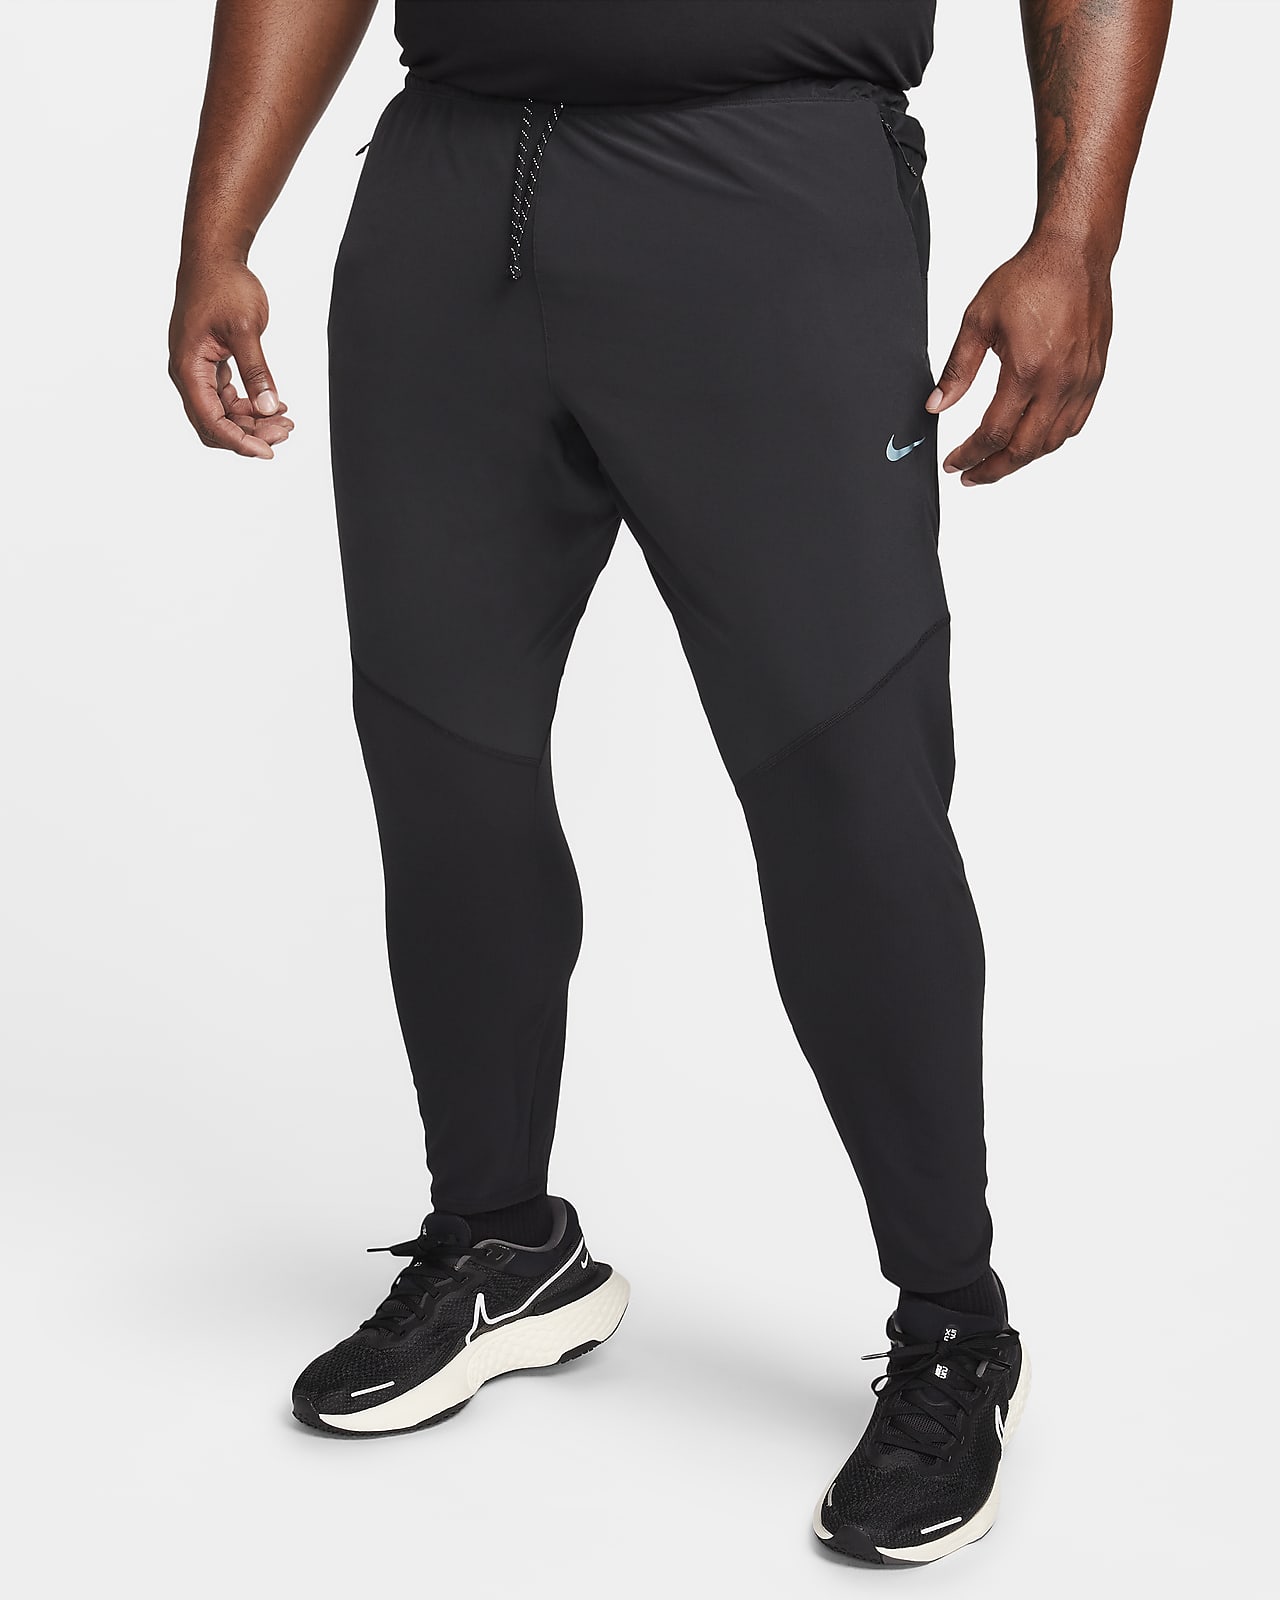 Nike Phenom Dri-Fit Woven Running Gym Pants Mens Size Large Black